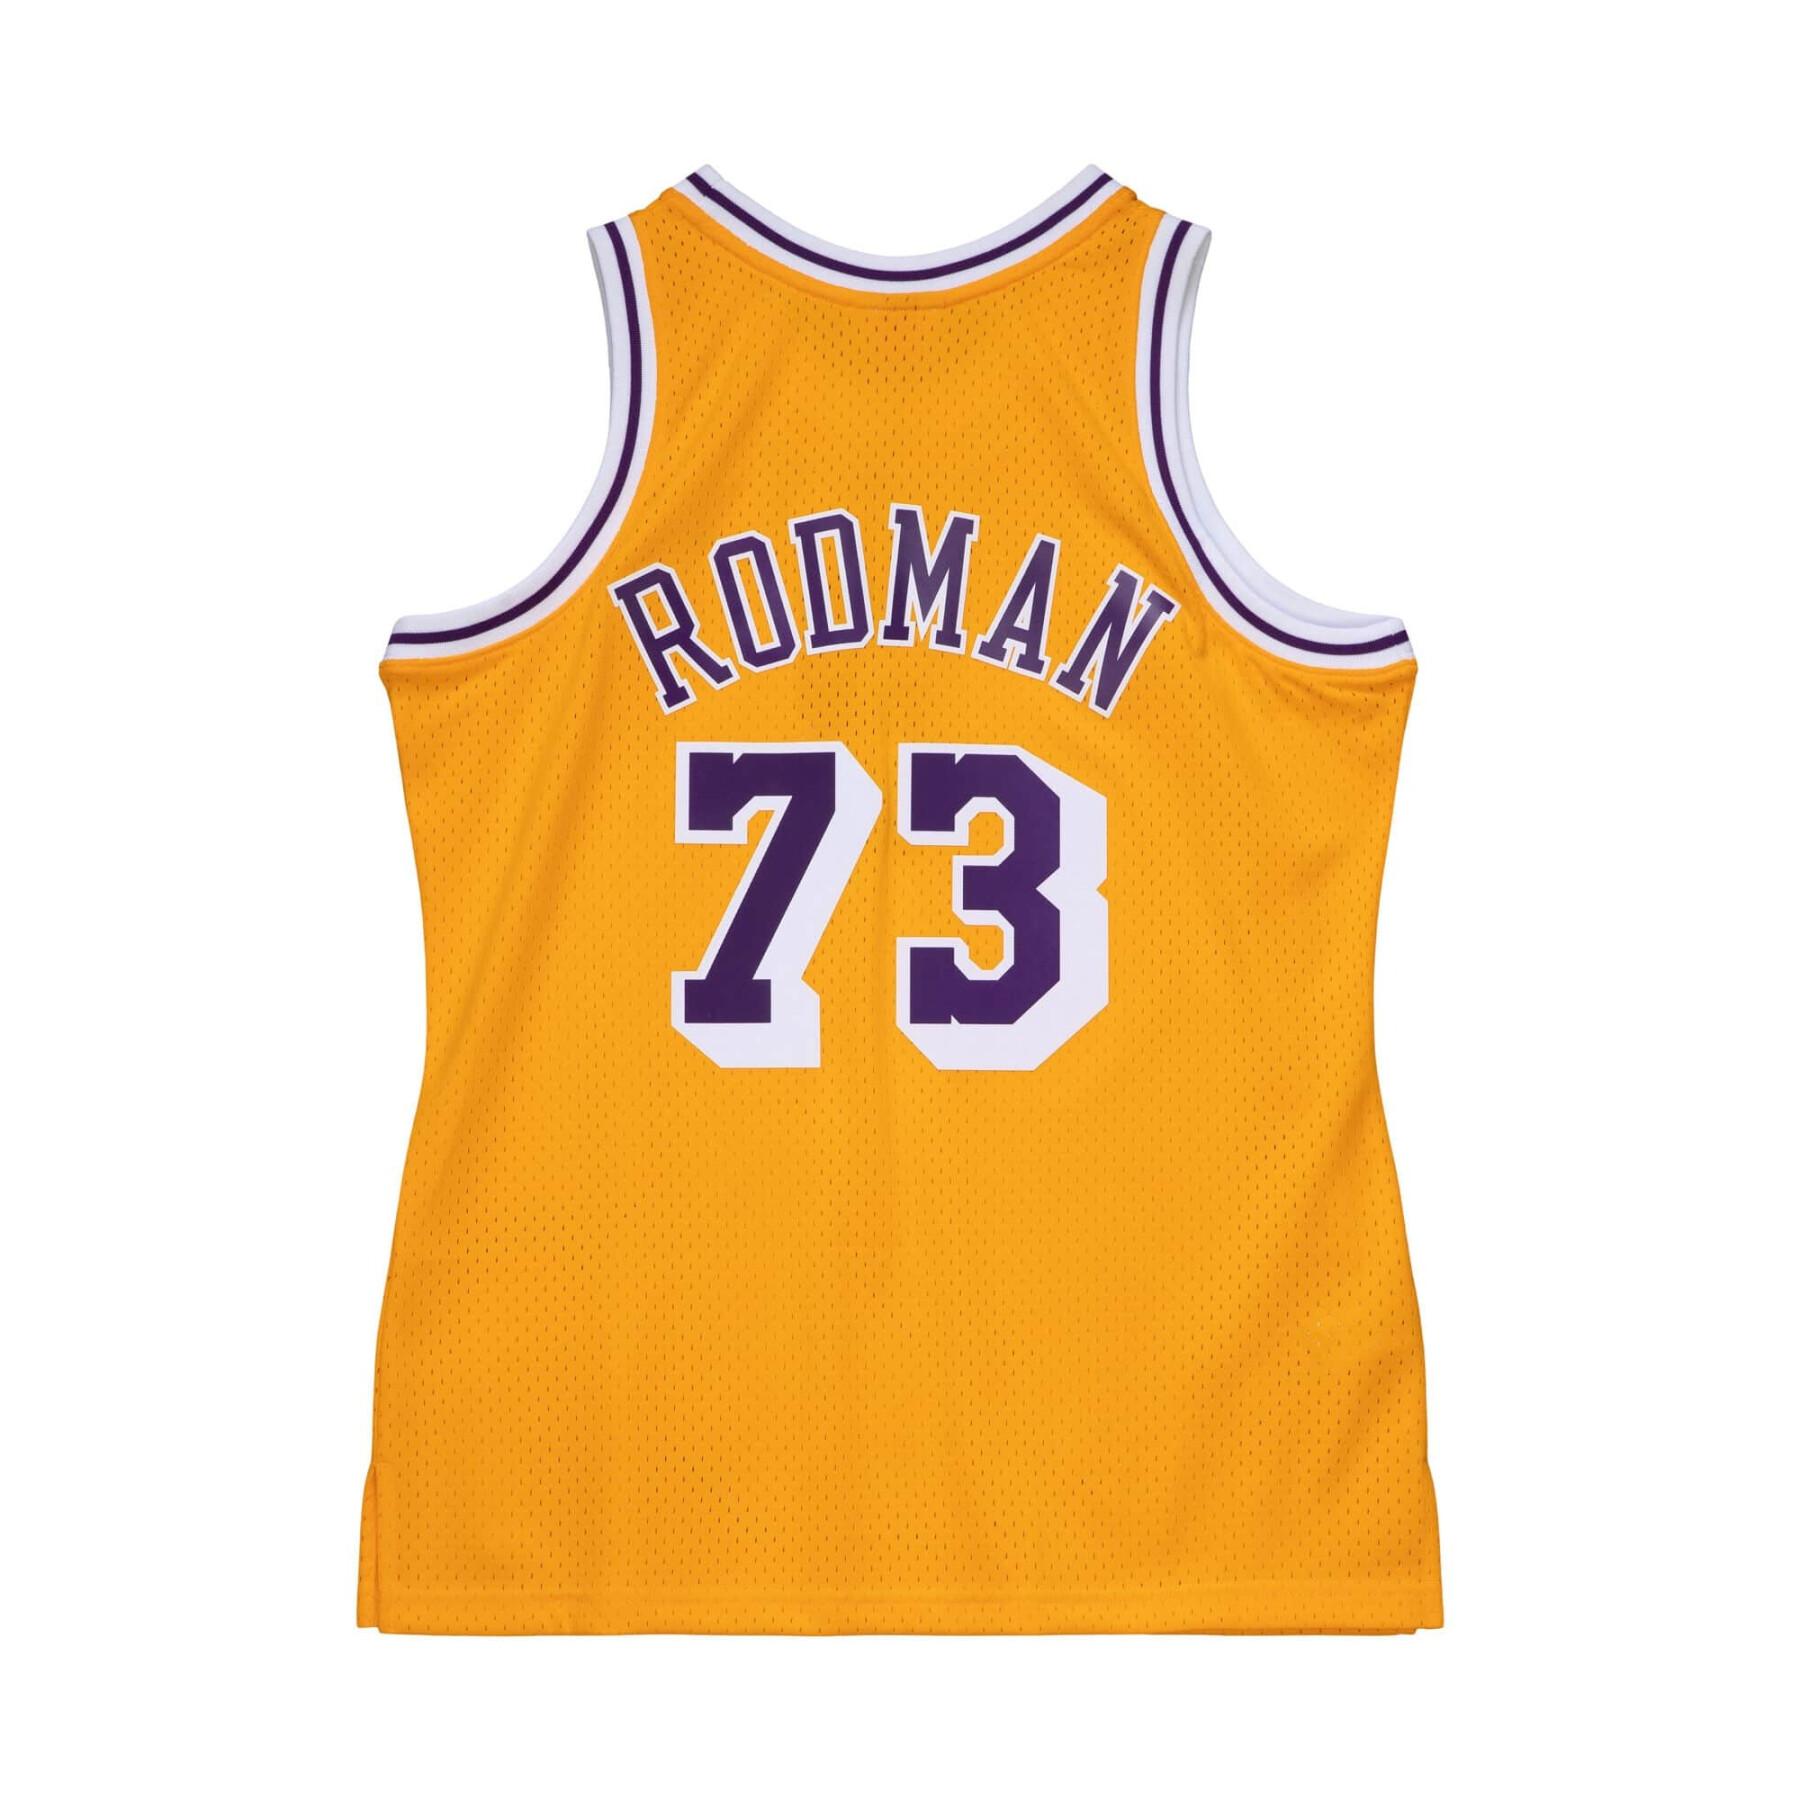 Maglia Los Angeles Lakers NBA Swingman 1998 Dennis Rodman